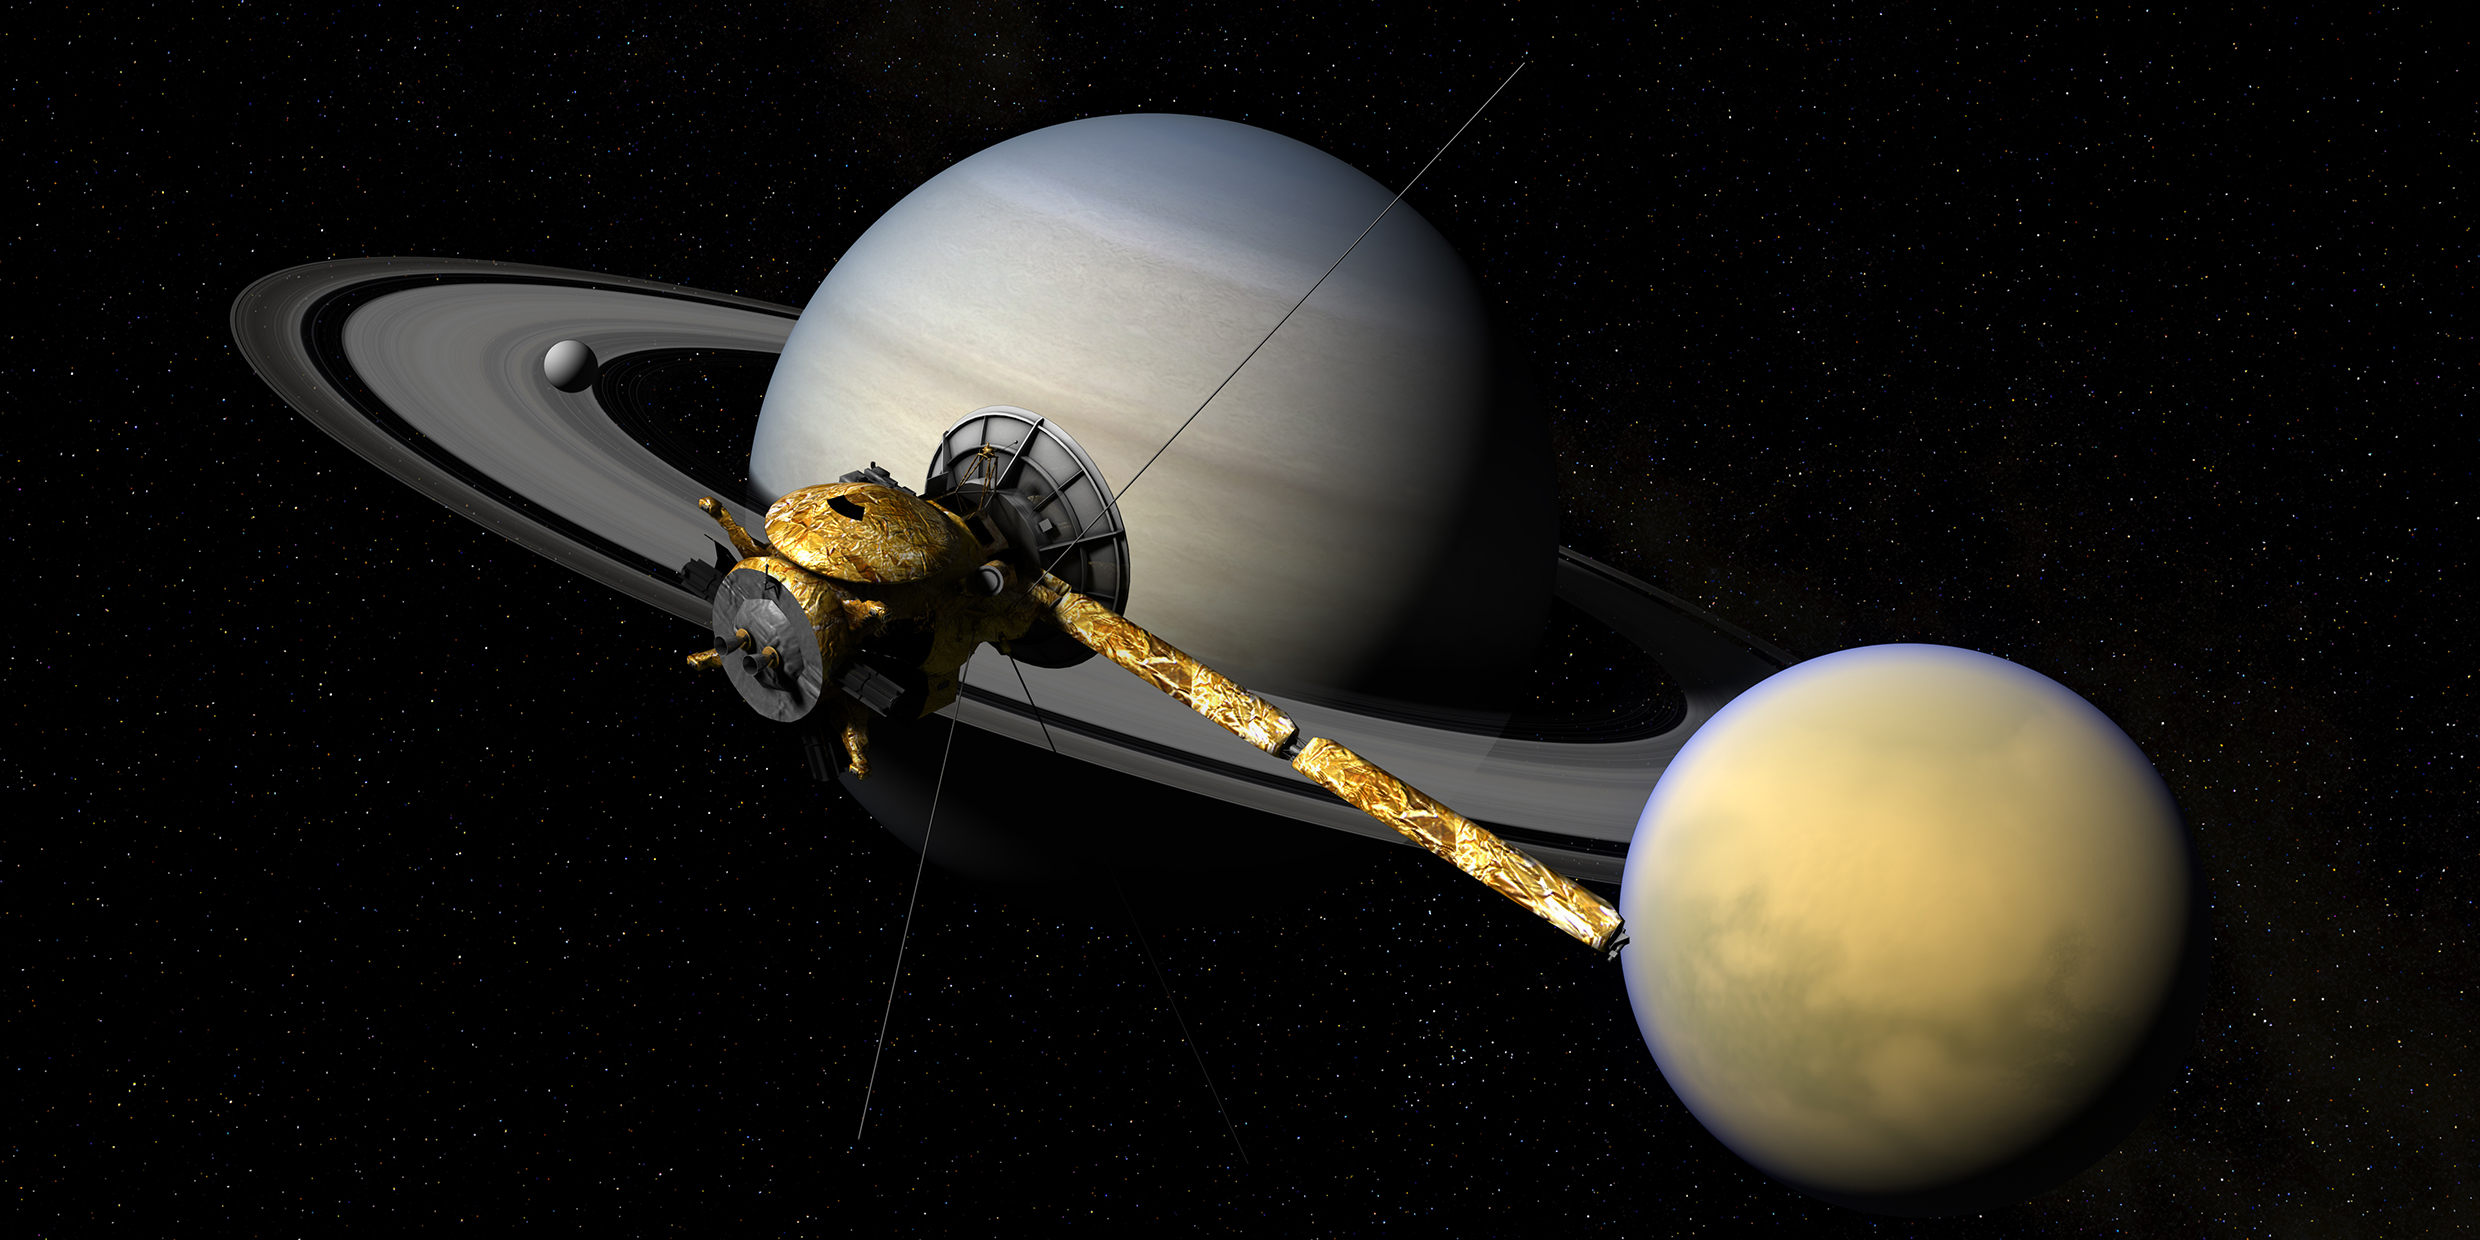 Cassini’s slingshot tour